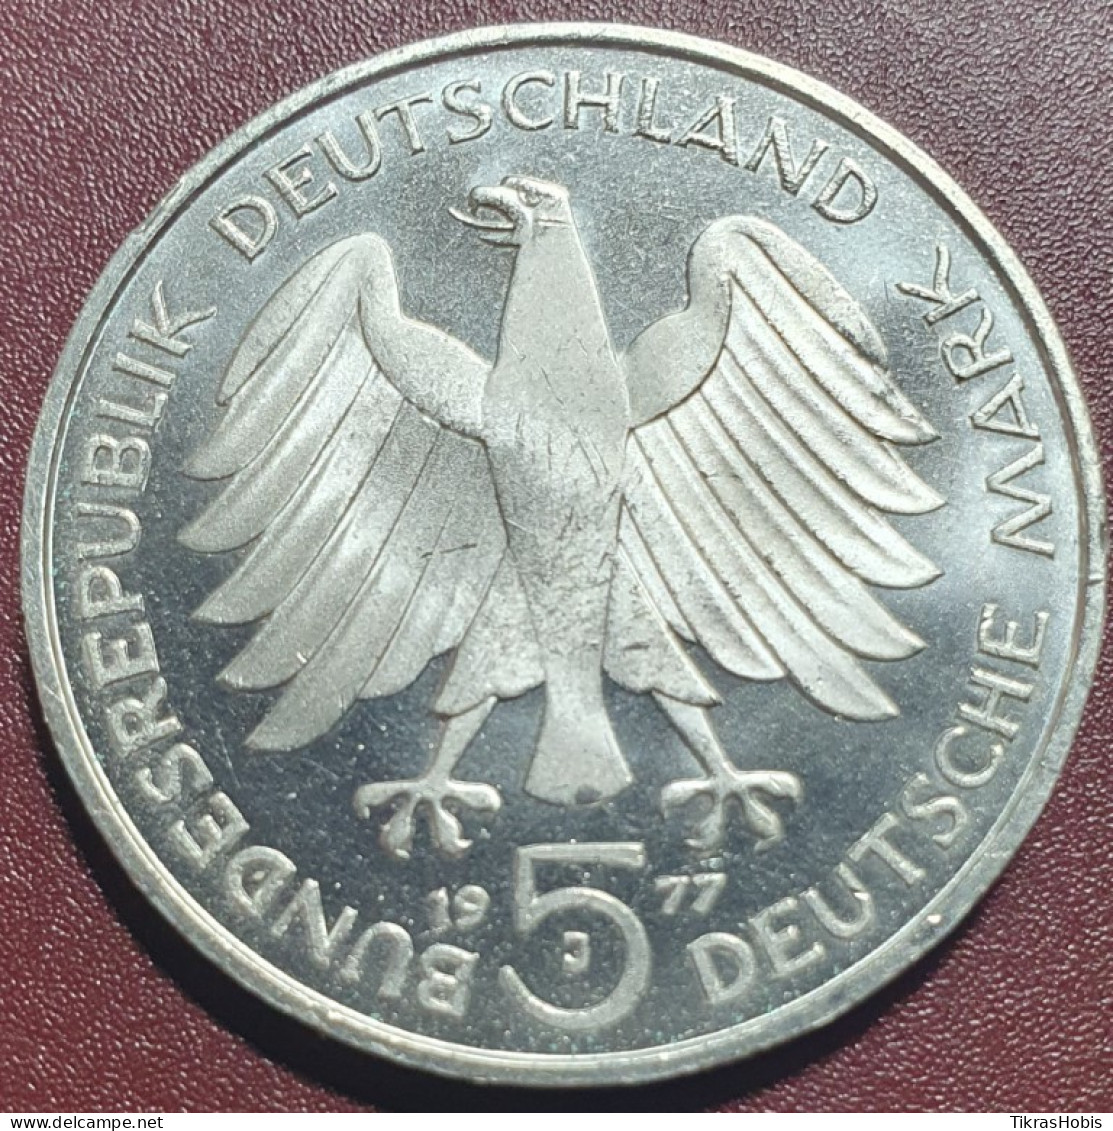 Germany 5 Brands, 1977 K. Friedrich Gauss 200 Km145 - Commemorative